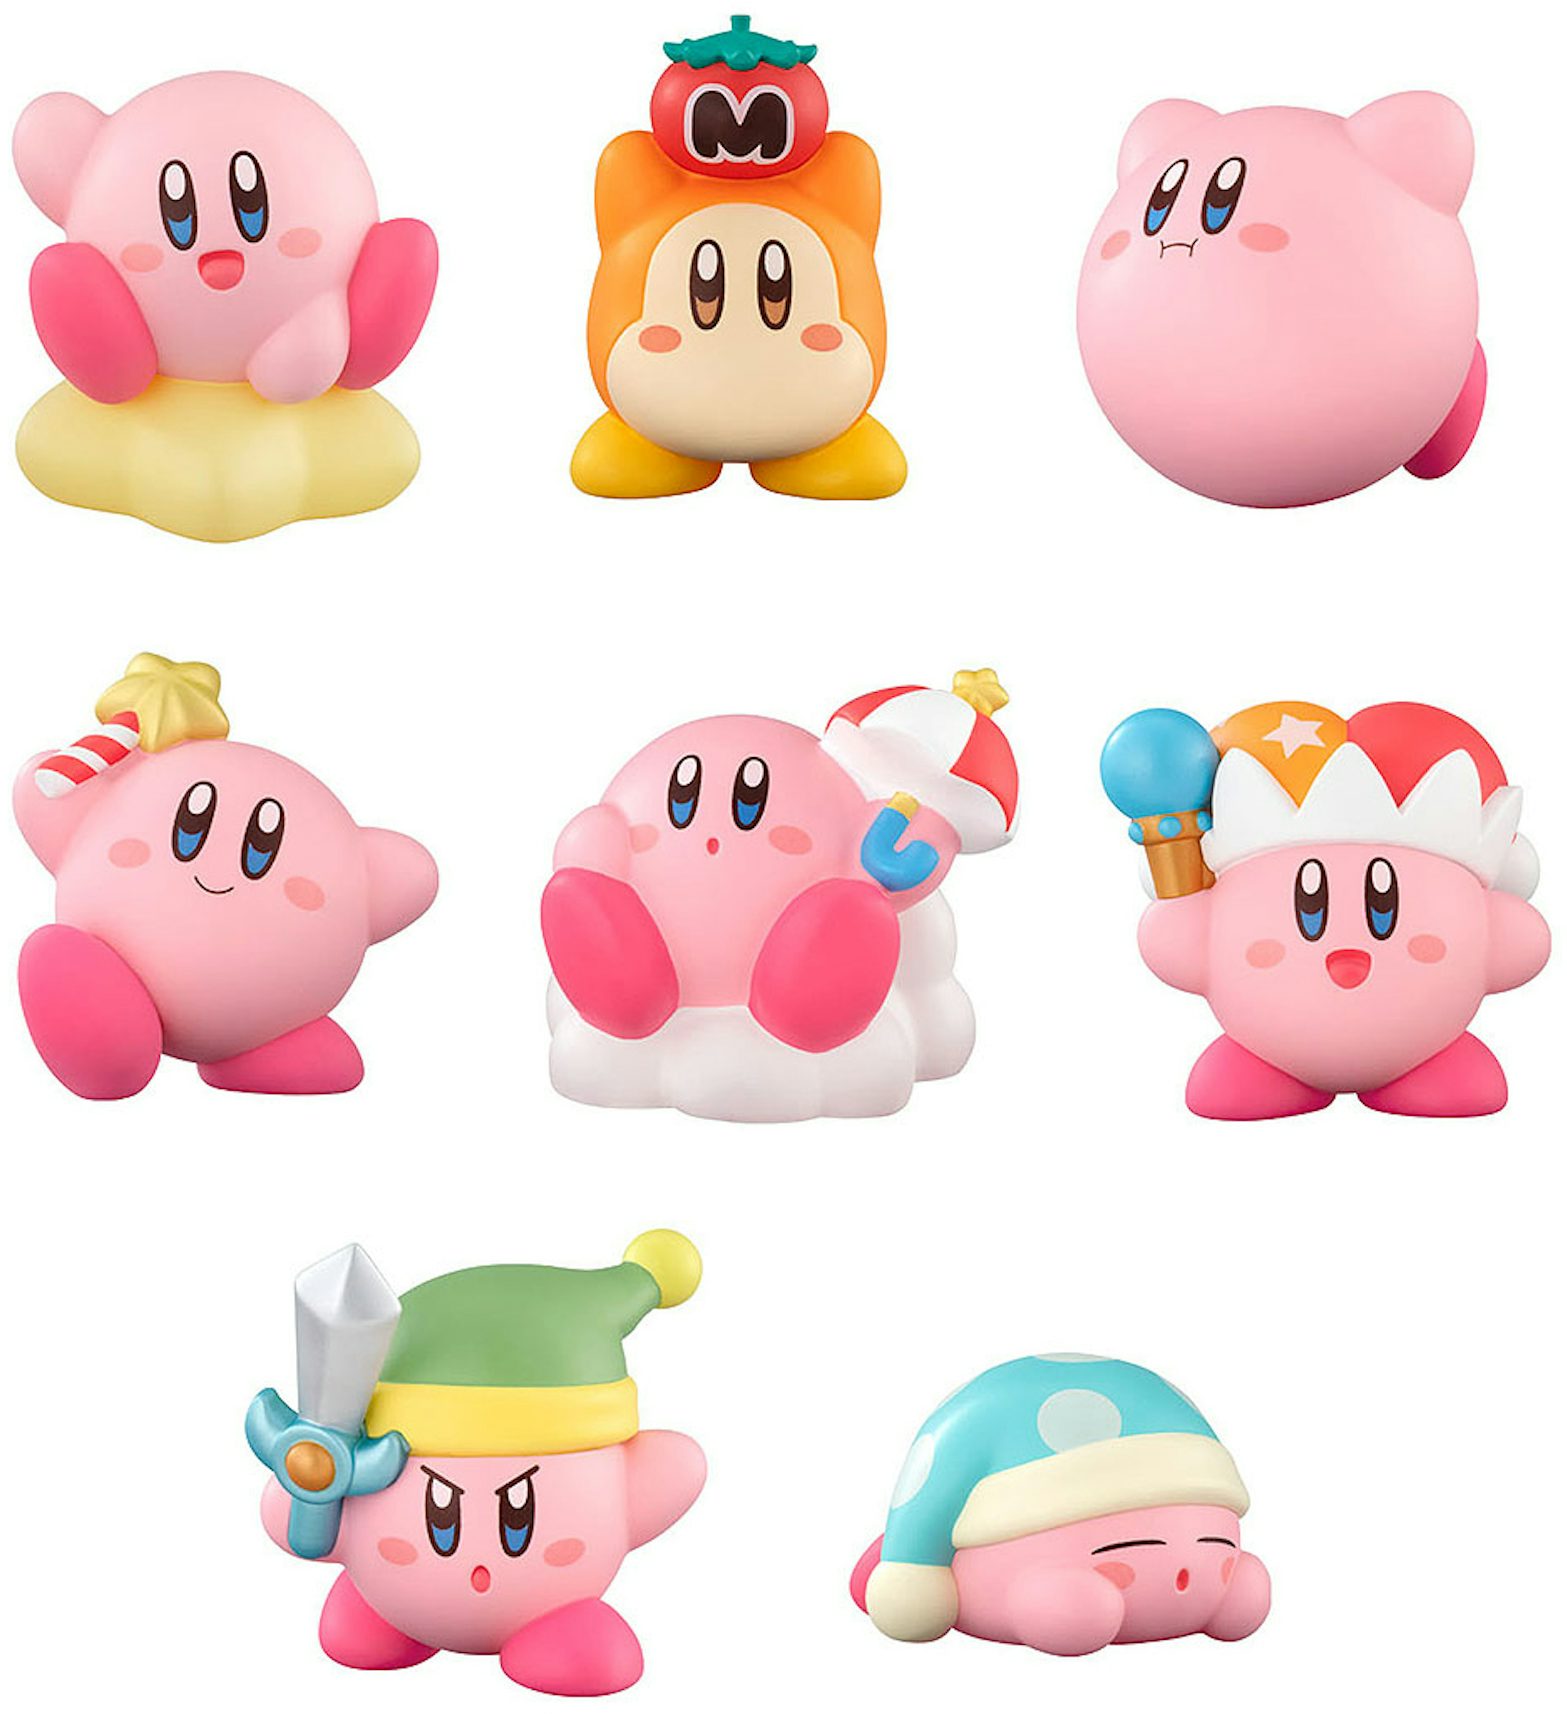 Kirby's Dream Land Kirby Friends 3 BANDAI